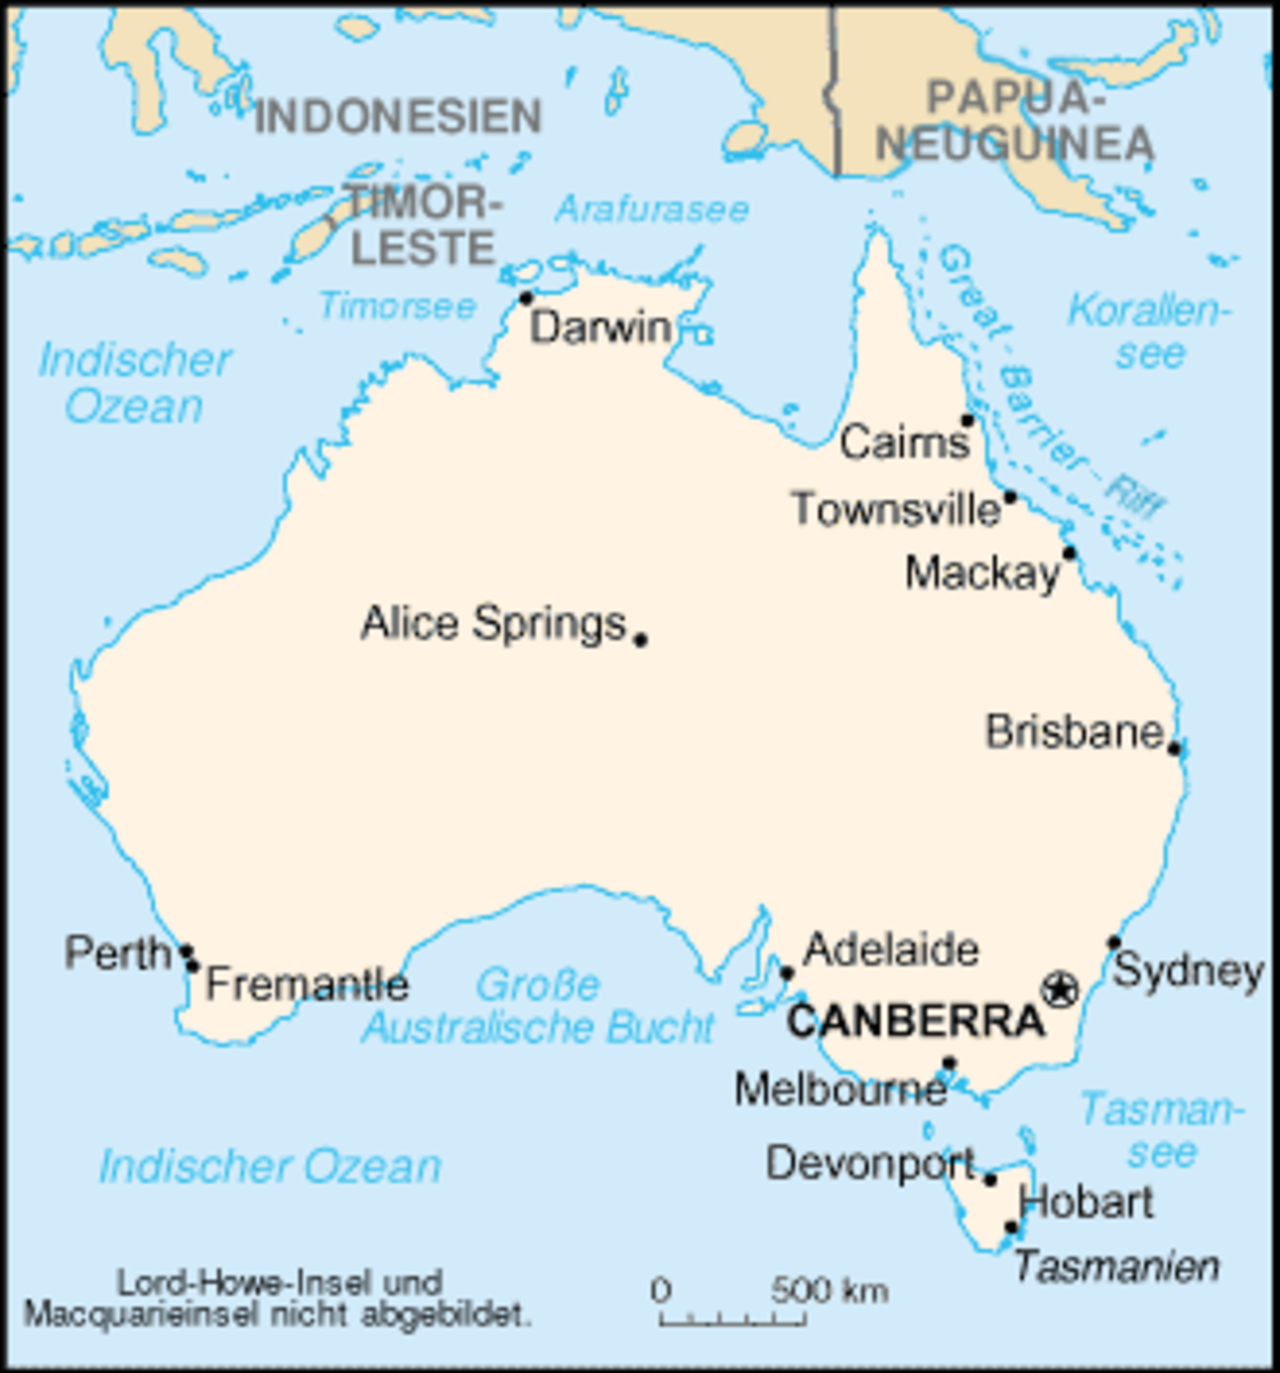 Тиморское море на карте Австралии. Моря заливы проливы Австралии на карте. Моря океаны проливы заливы Австралии на карте. Моря омывающие Австралию на карте.